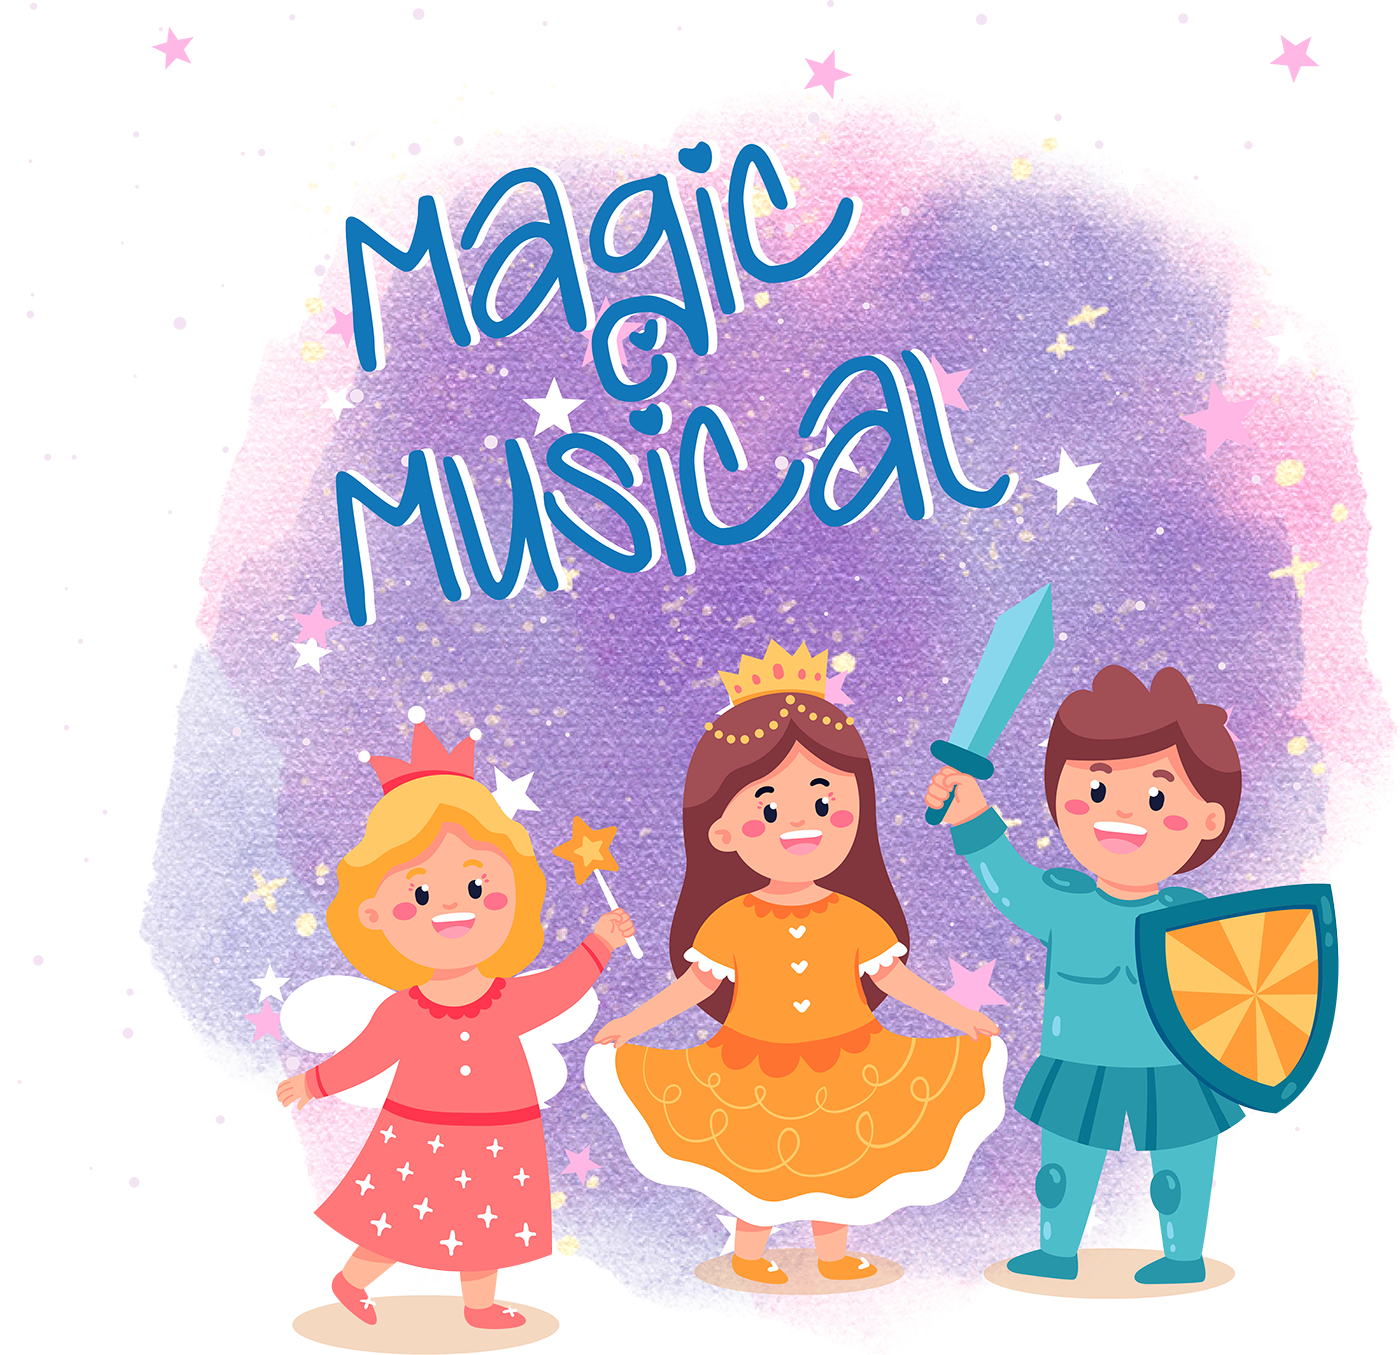 Magic musical